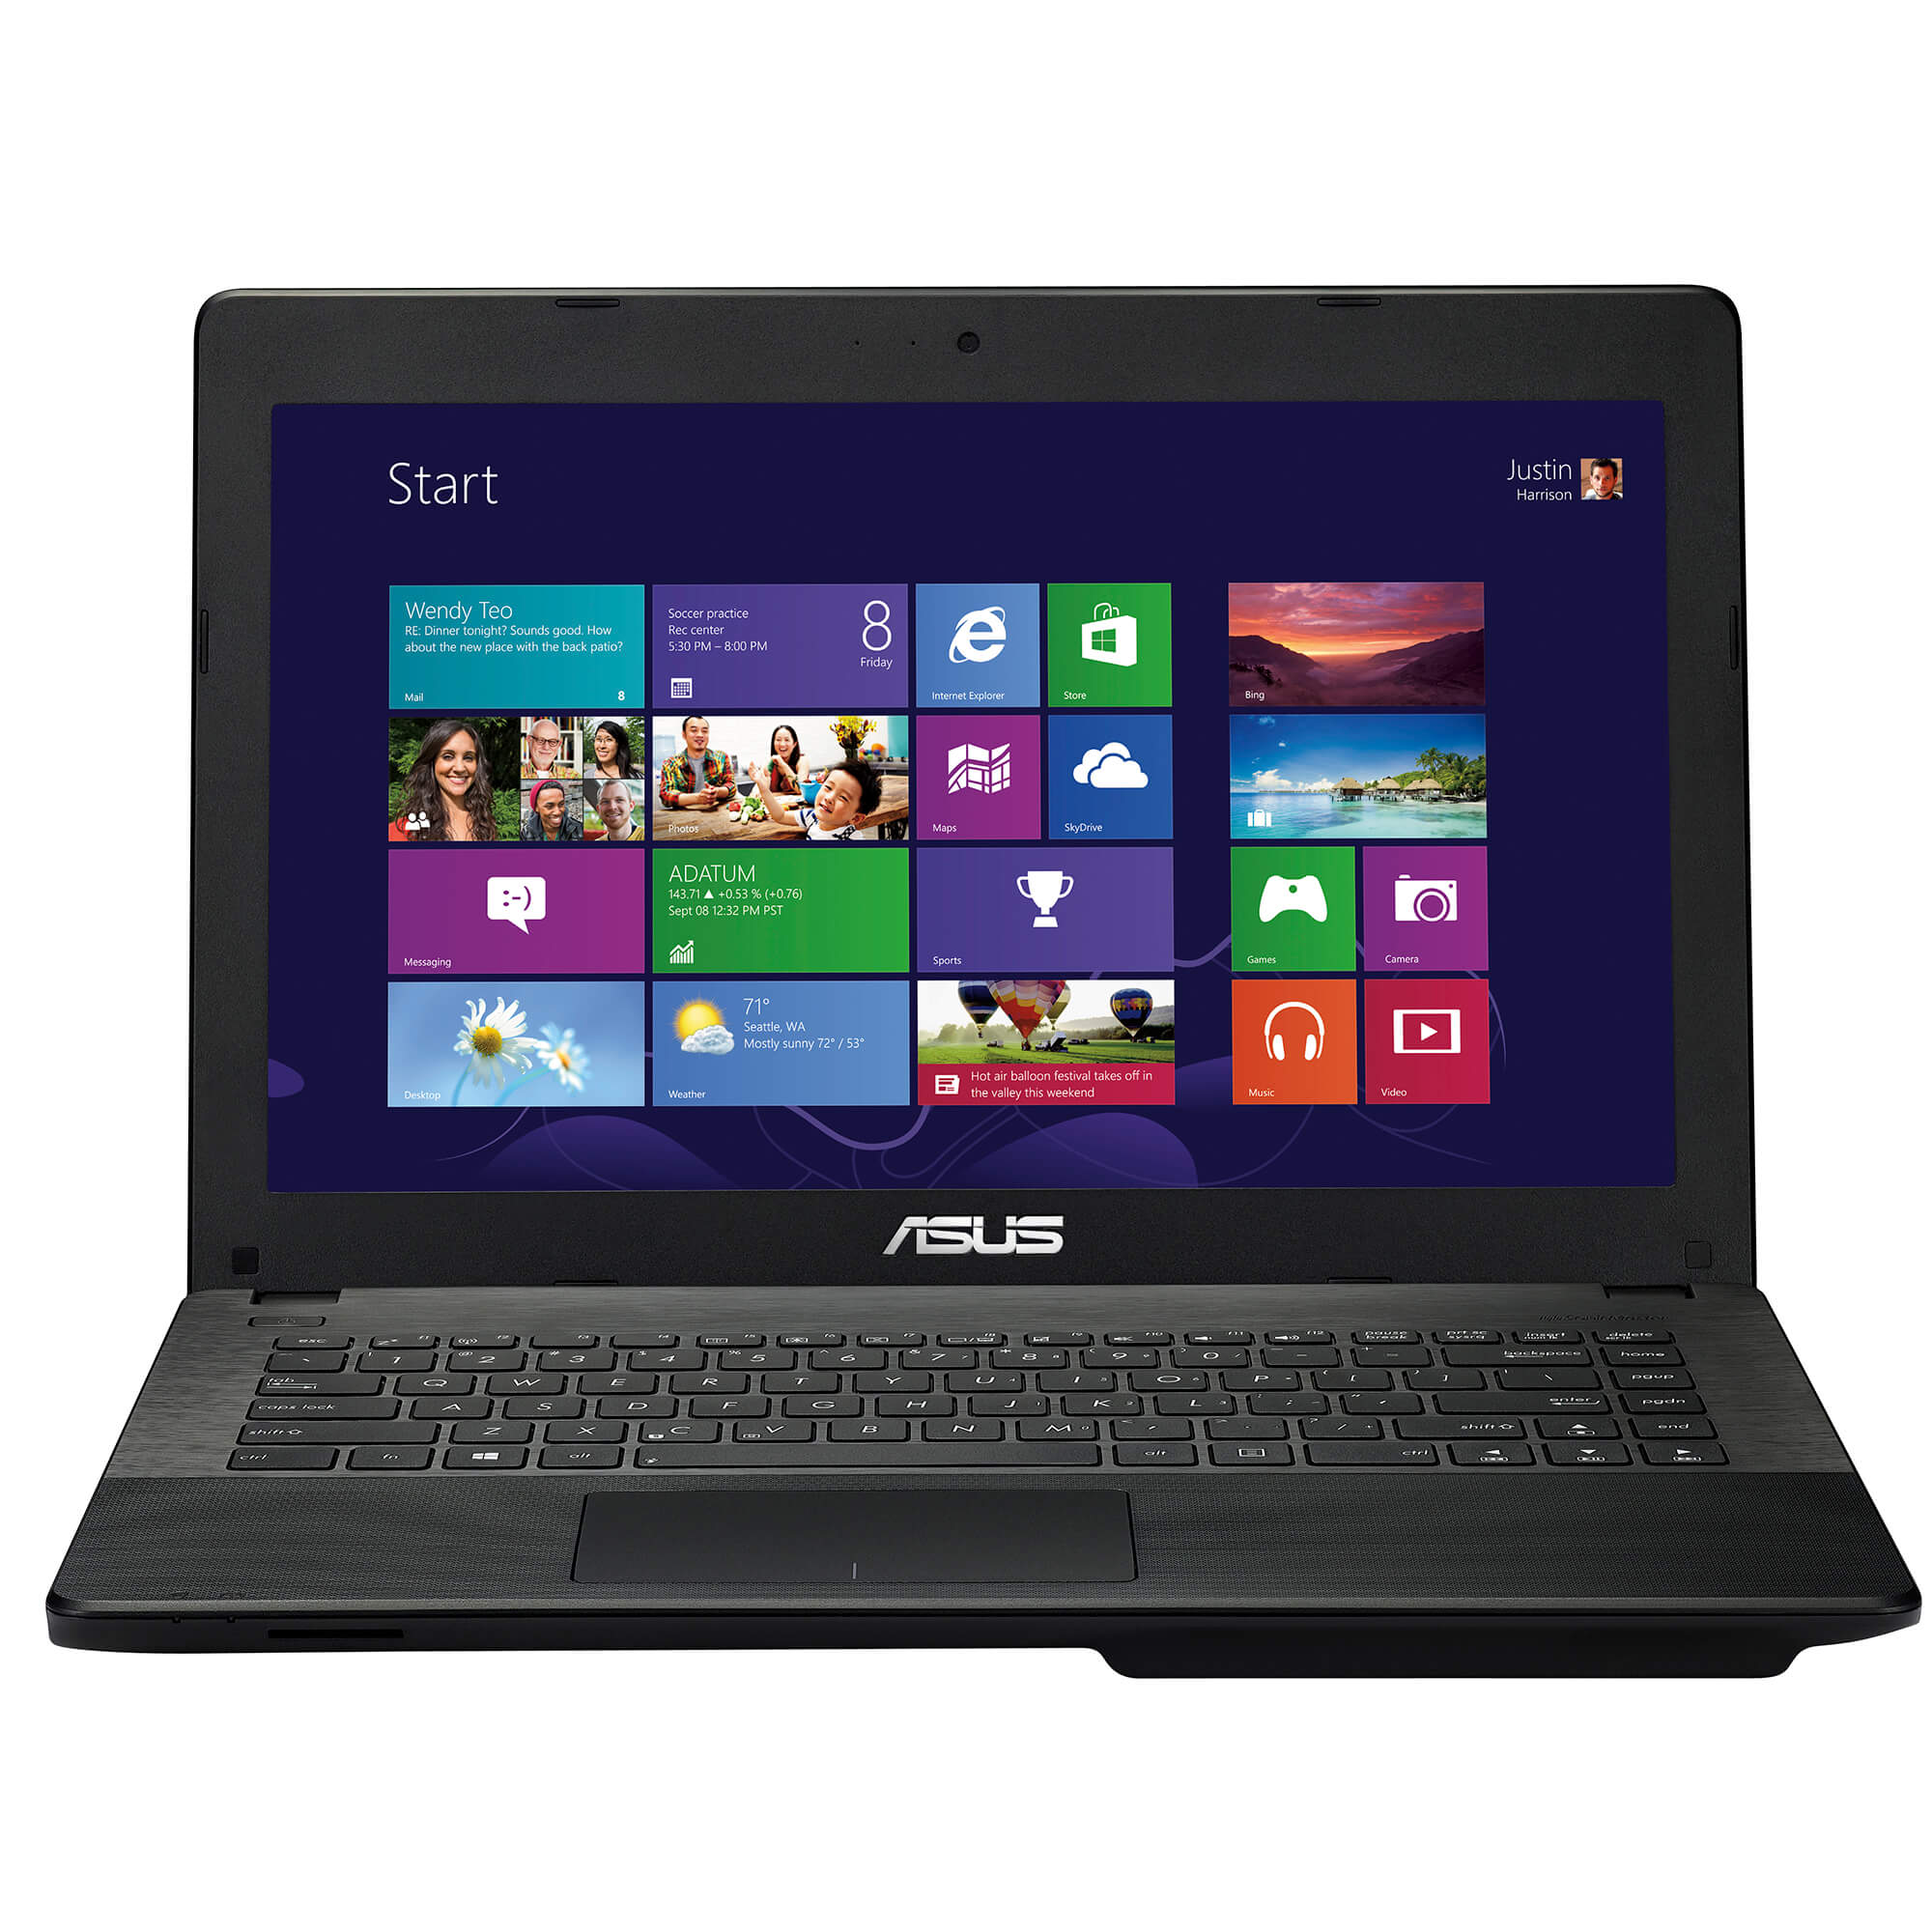  Laptop Asus X451MAV-VX285B, Intel Celeron N2930, 4GB DDR3, HDD 500GB, Intel HD Graphics, Windows 8 